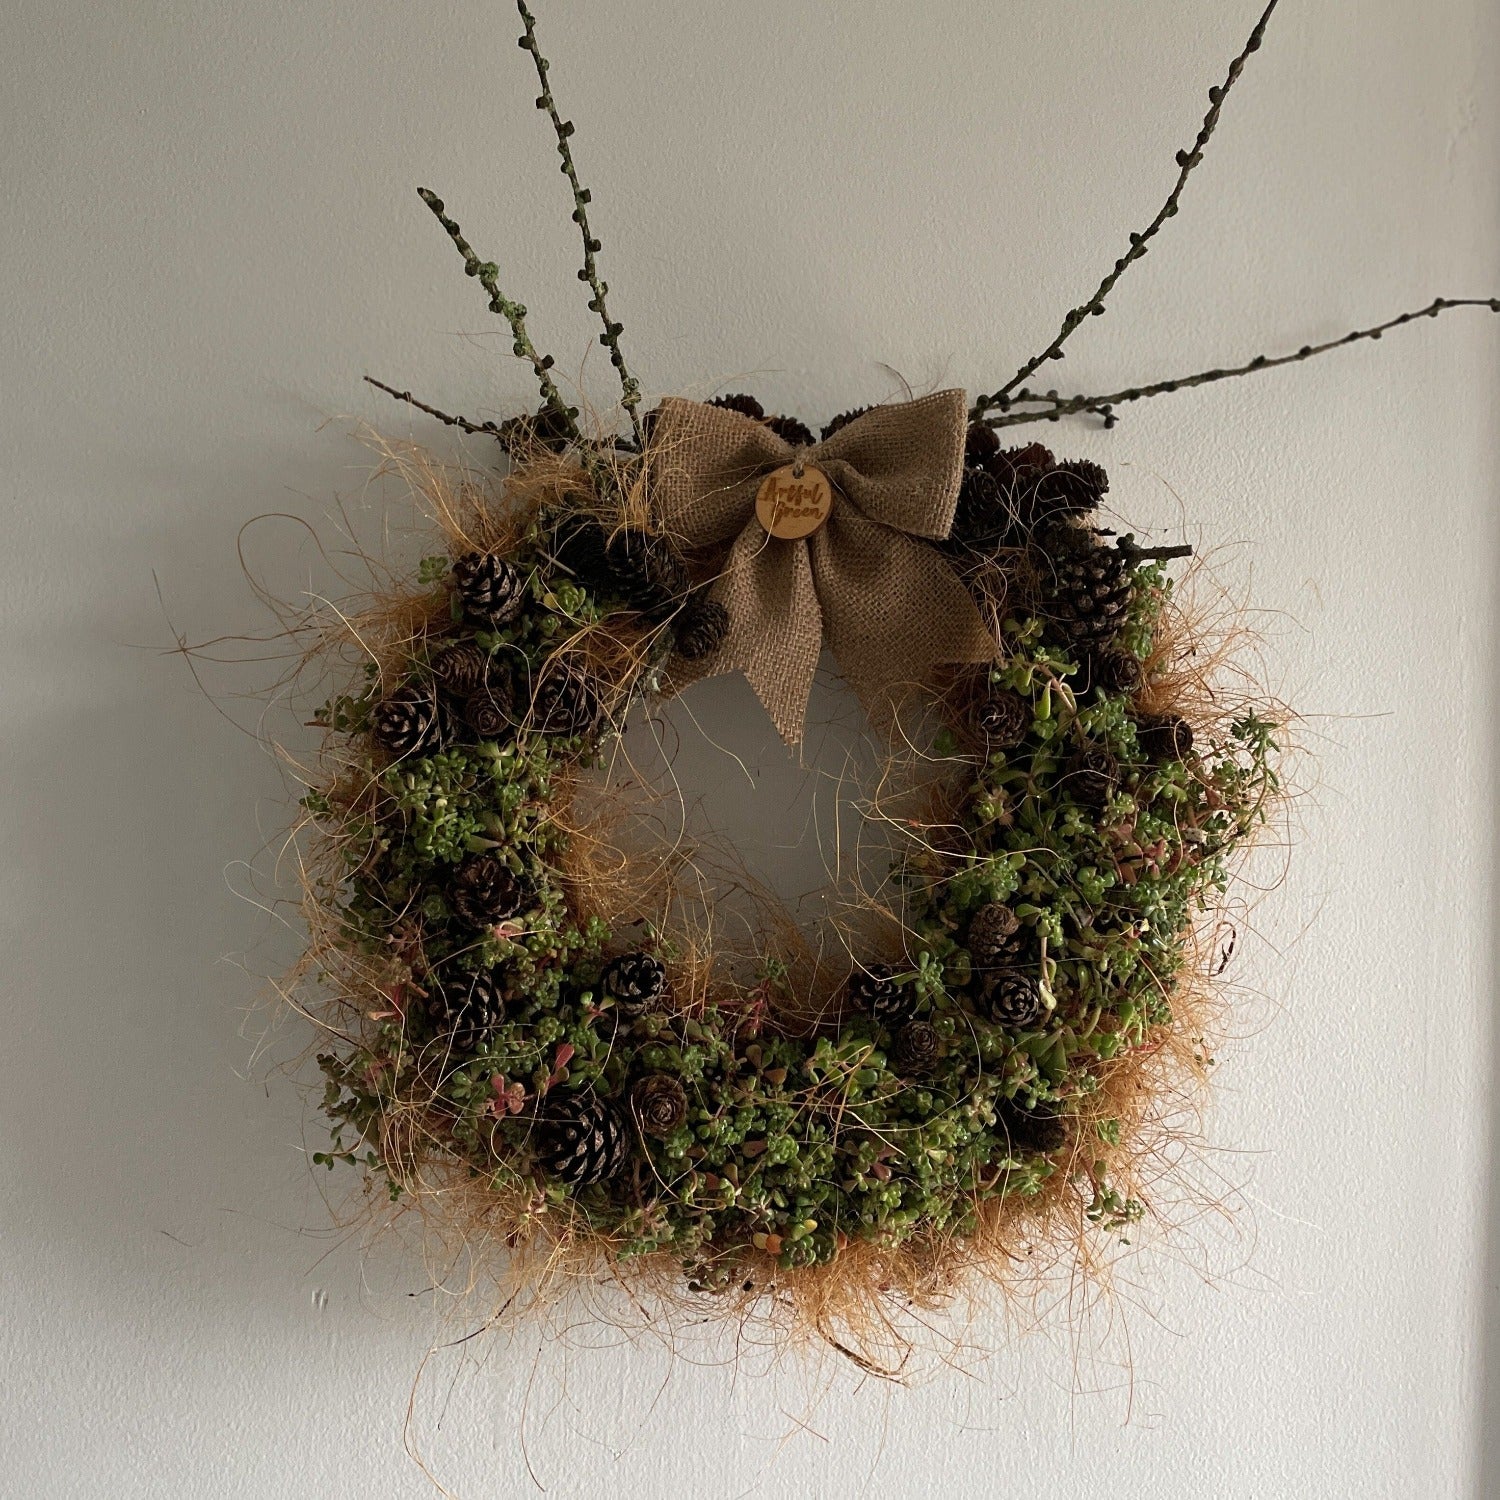 sedum wreath handmade by Artful Green in Kildare using Sedum grown in Kildare.